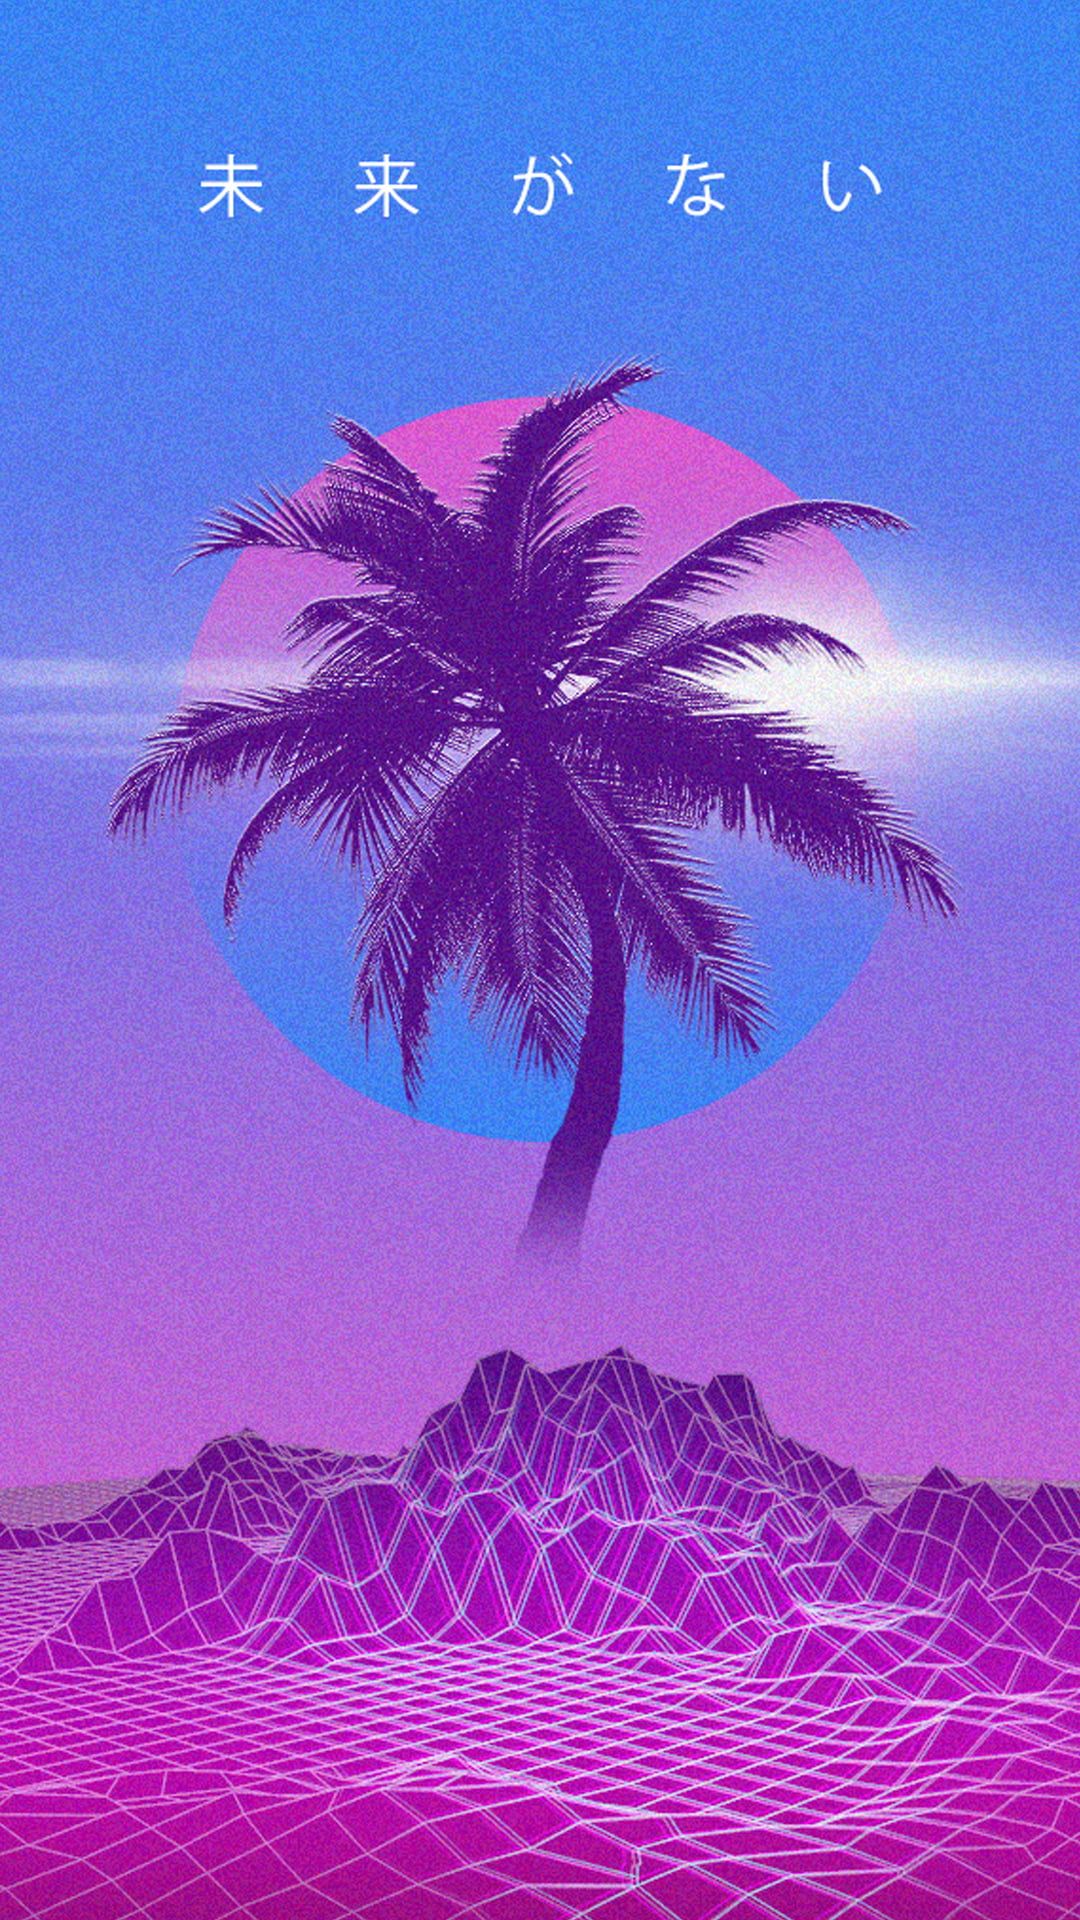 Free download Coconut wallpaper vaporwave Retrowave palm trees